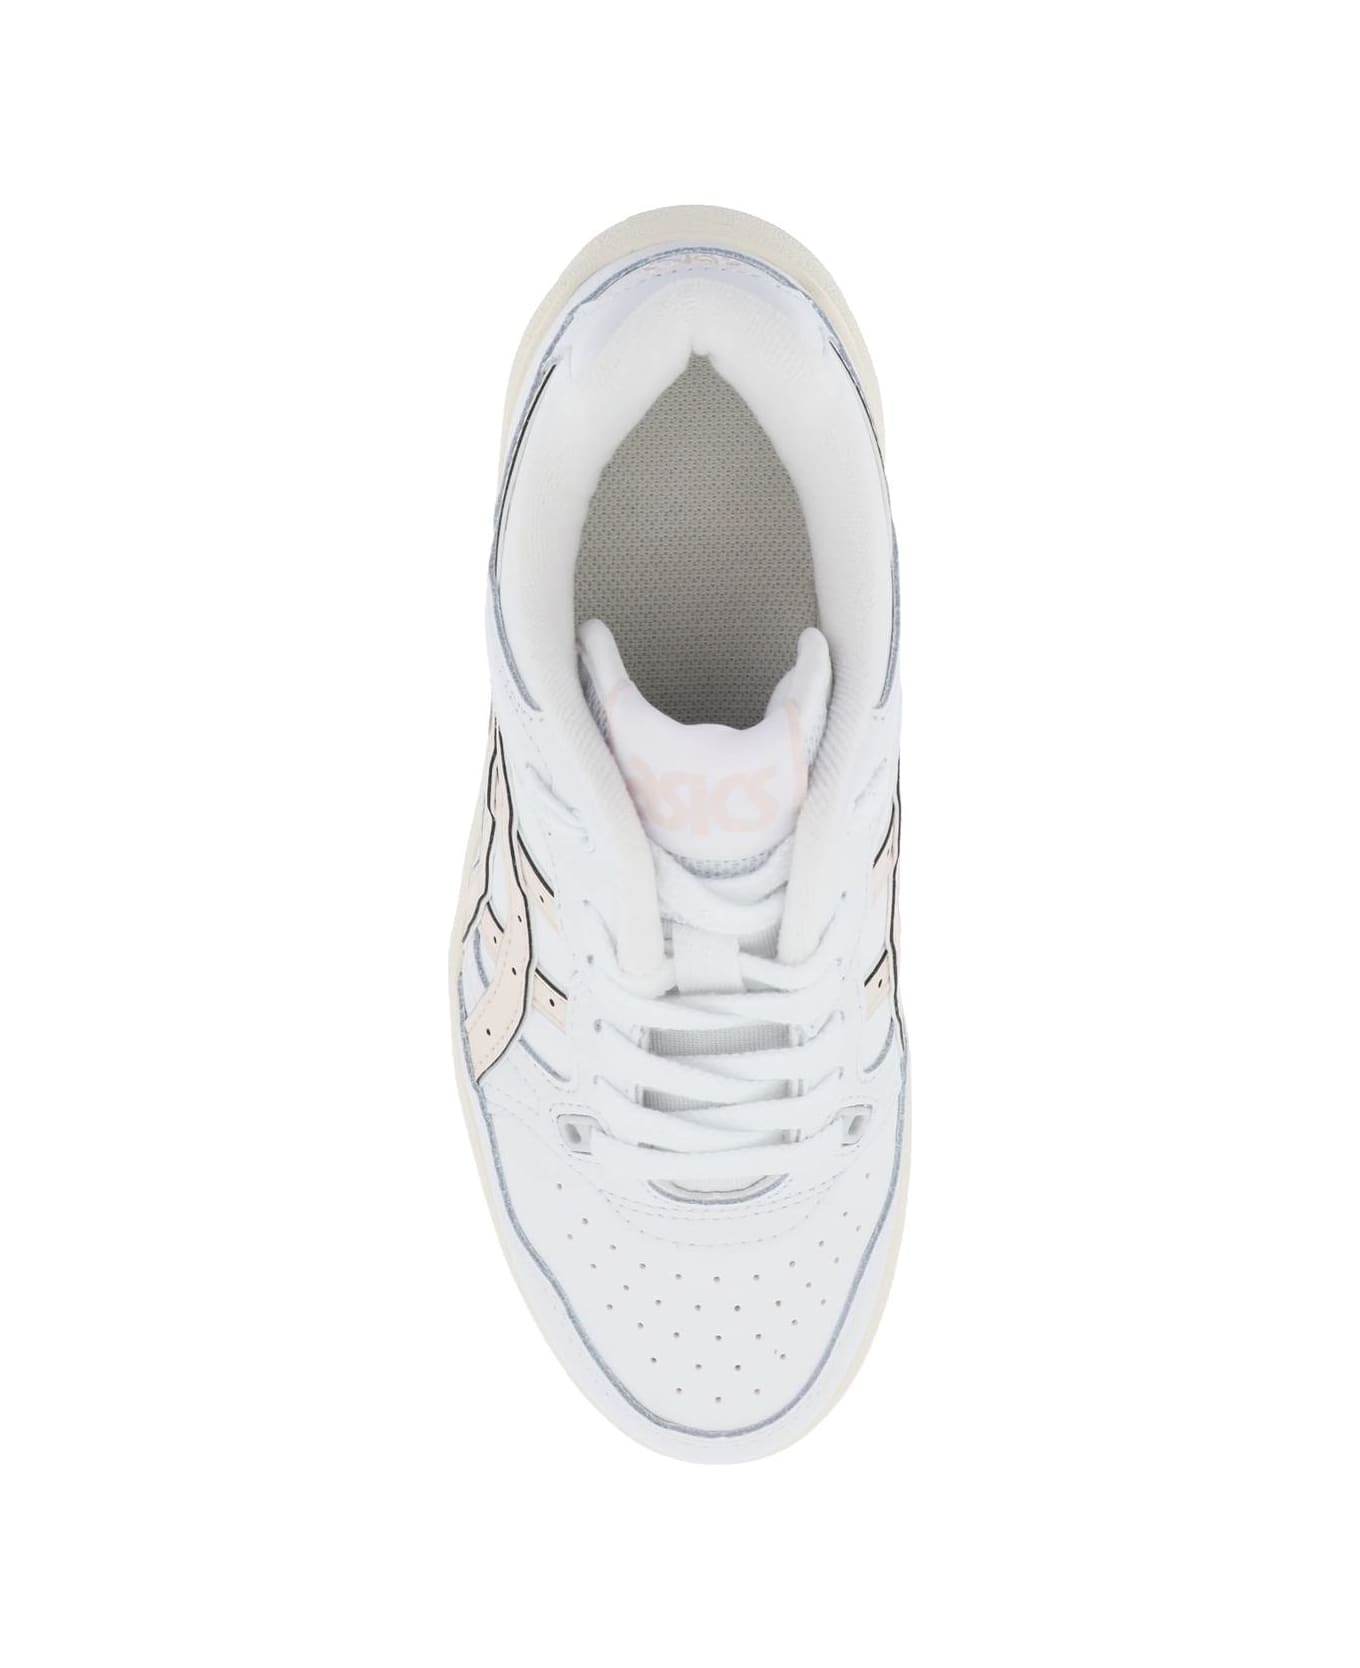 Asics Ex89 Sneakers - WHITE MINERAL BEIGE (White)